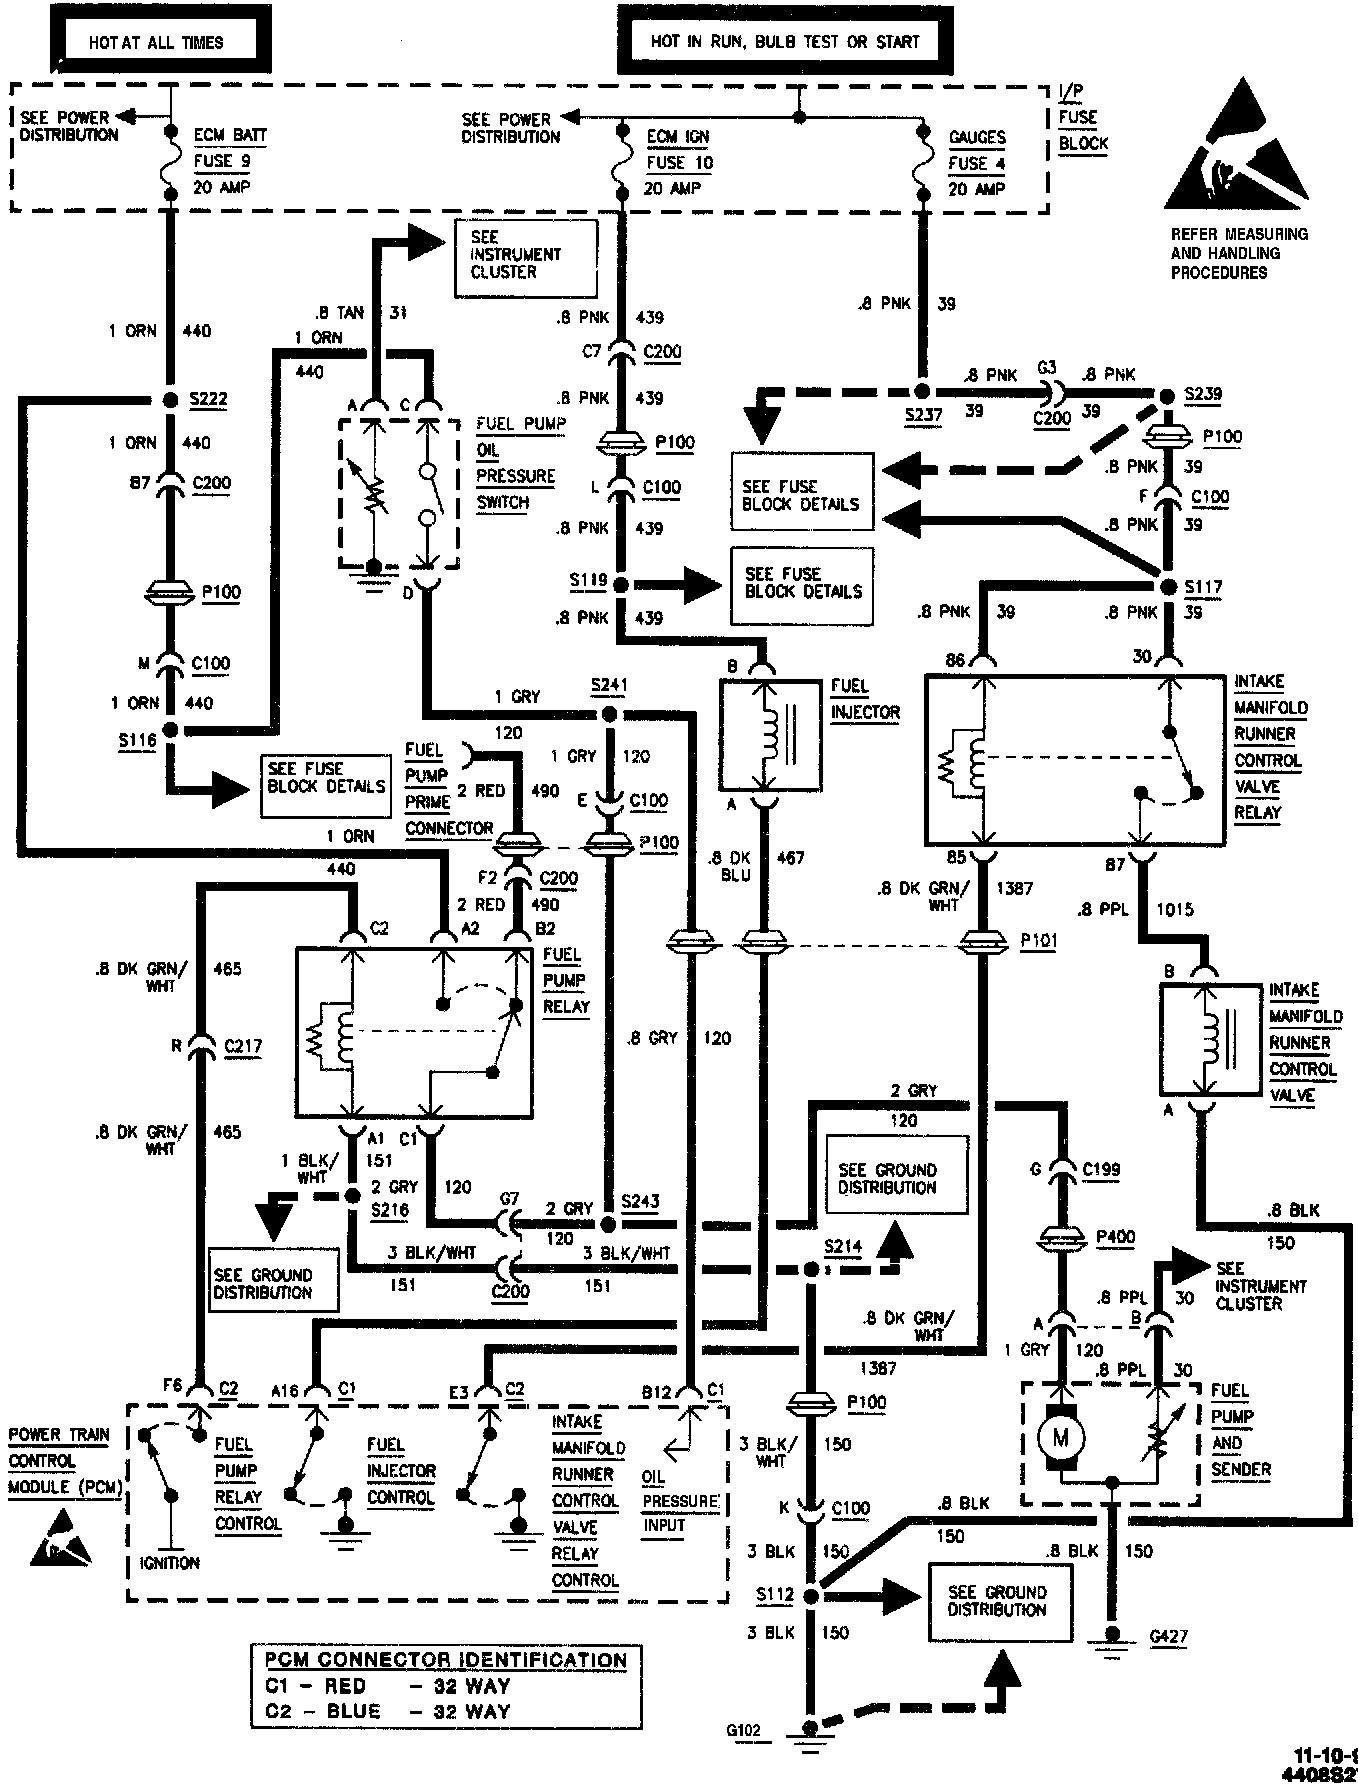 Chevy S10 Wiring Diagram S10 Wiring Schematic Of Chevy S10 Wiring Diagram